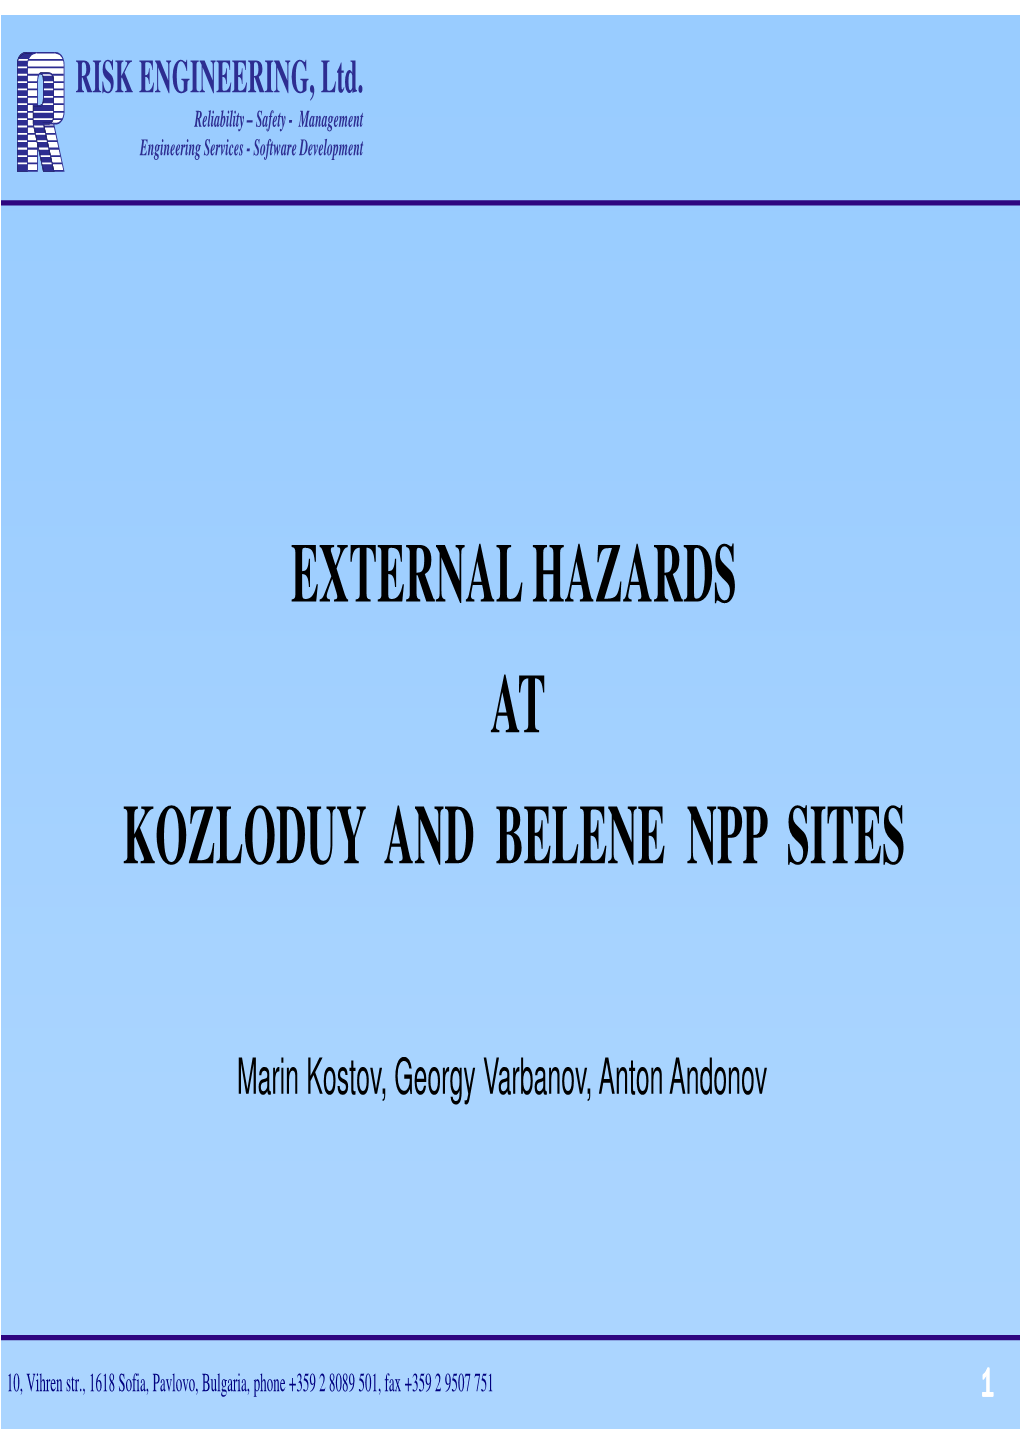 External Hazards at Kozloduy and Belene Npp Sites